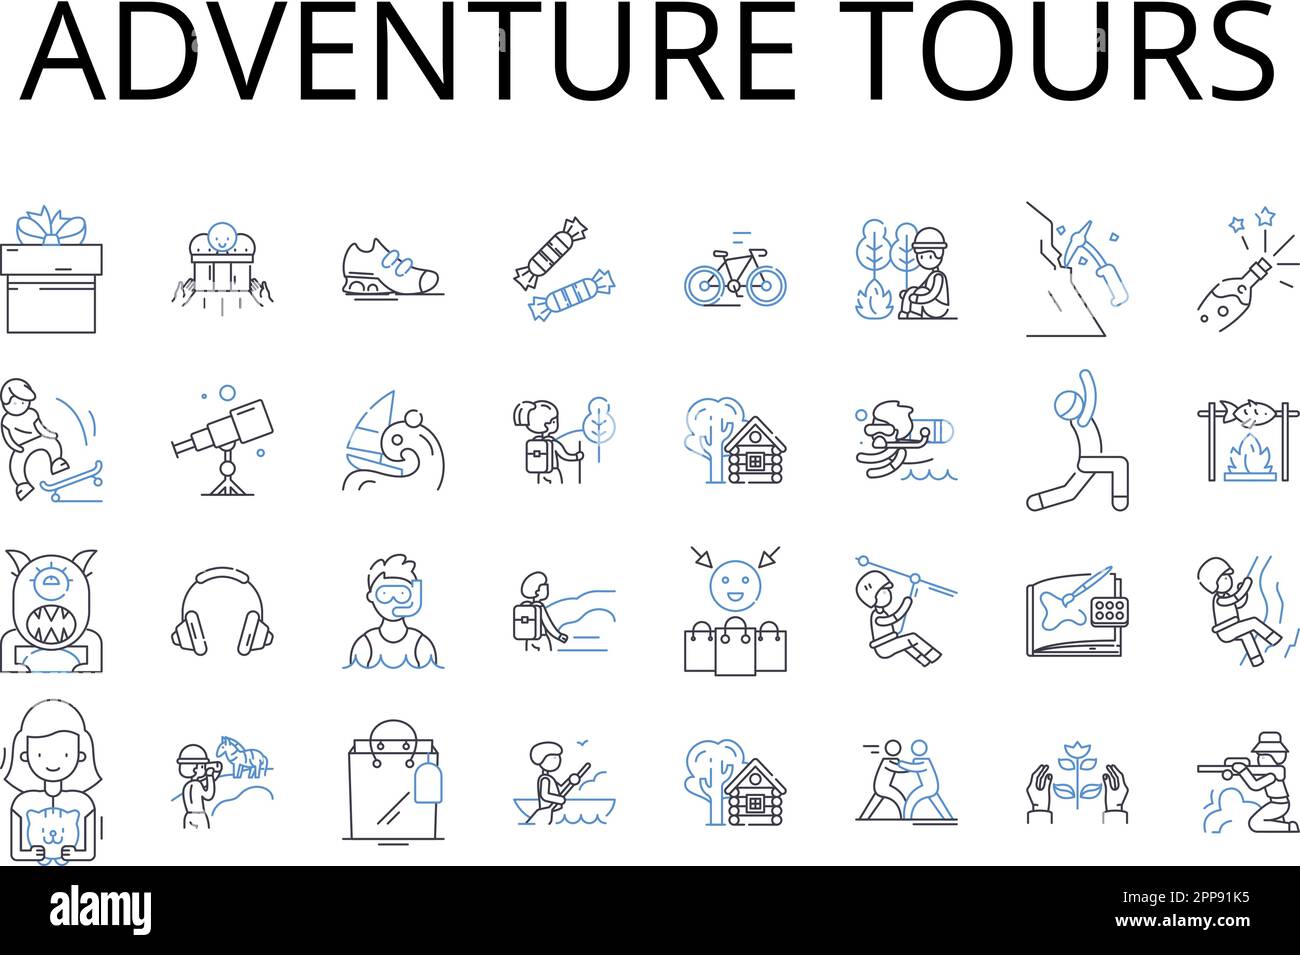 Adventure Tours Line Icons Kollektion. Öko-Reisen, Kulturtouren, Wildlife Safaris, Strandausflüge, Städtereisen, Kulinarische Ausflüge, Flussrundfahrten Stock Vektor